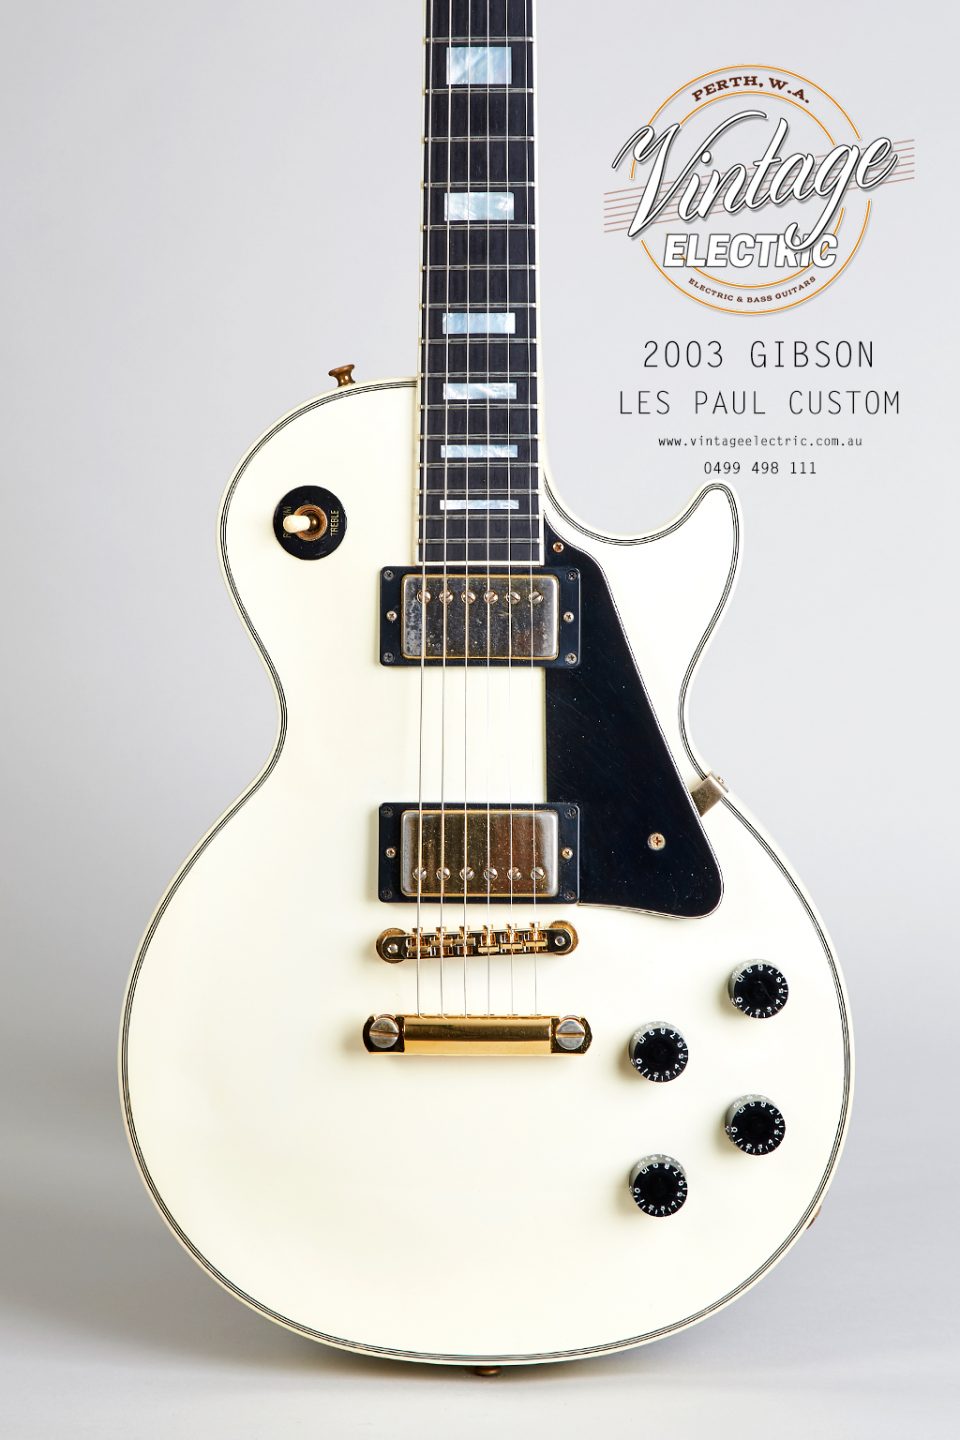 2003 Gibson Les Paul Custom Body